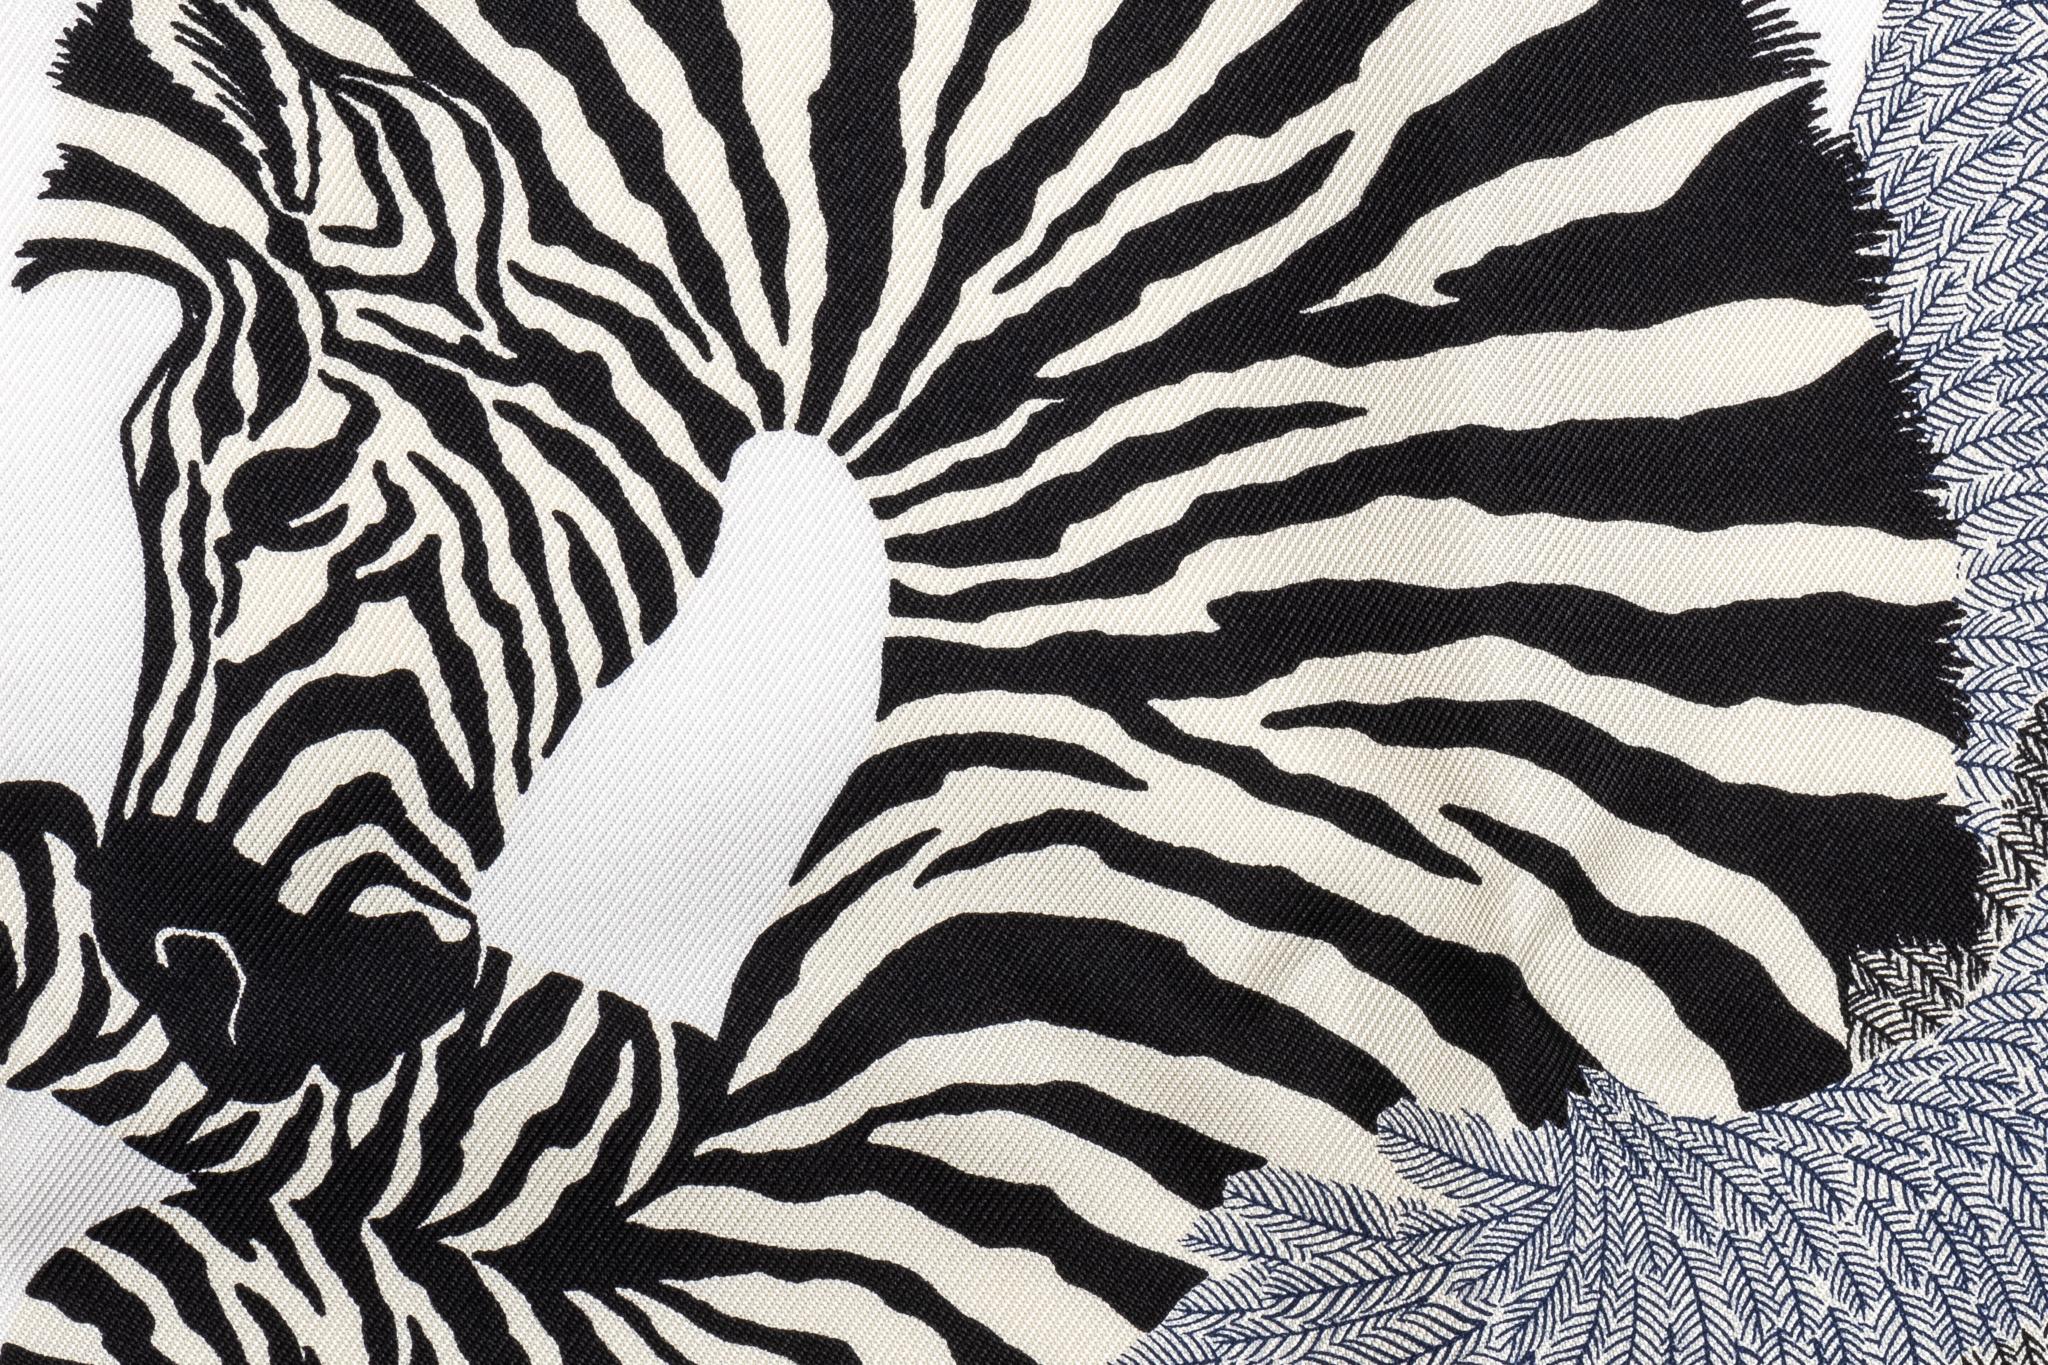 Women's New Hermes Collectible Black and White Zebra Pochette Scarf